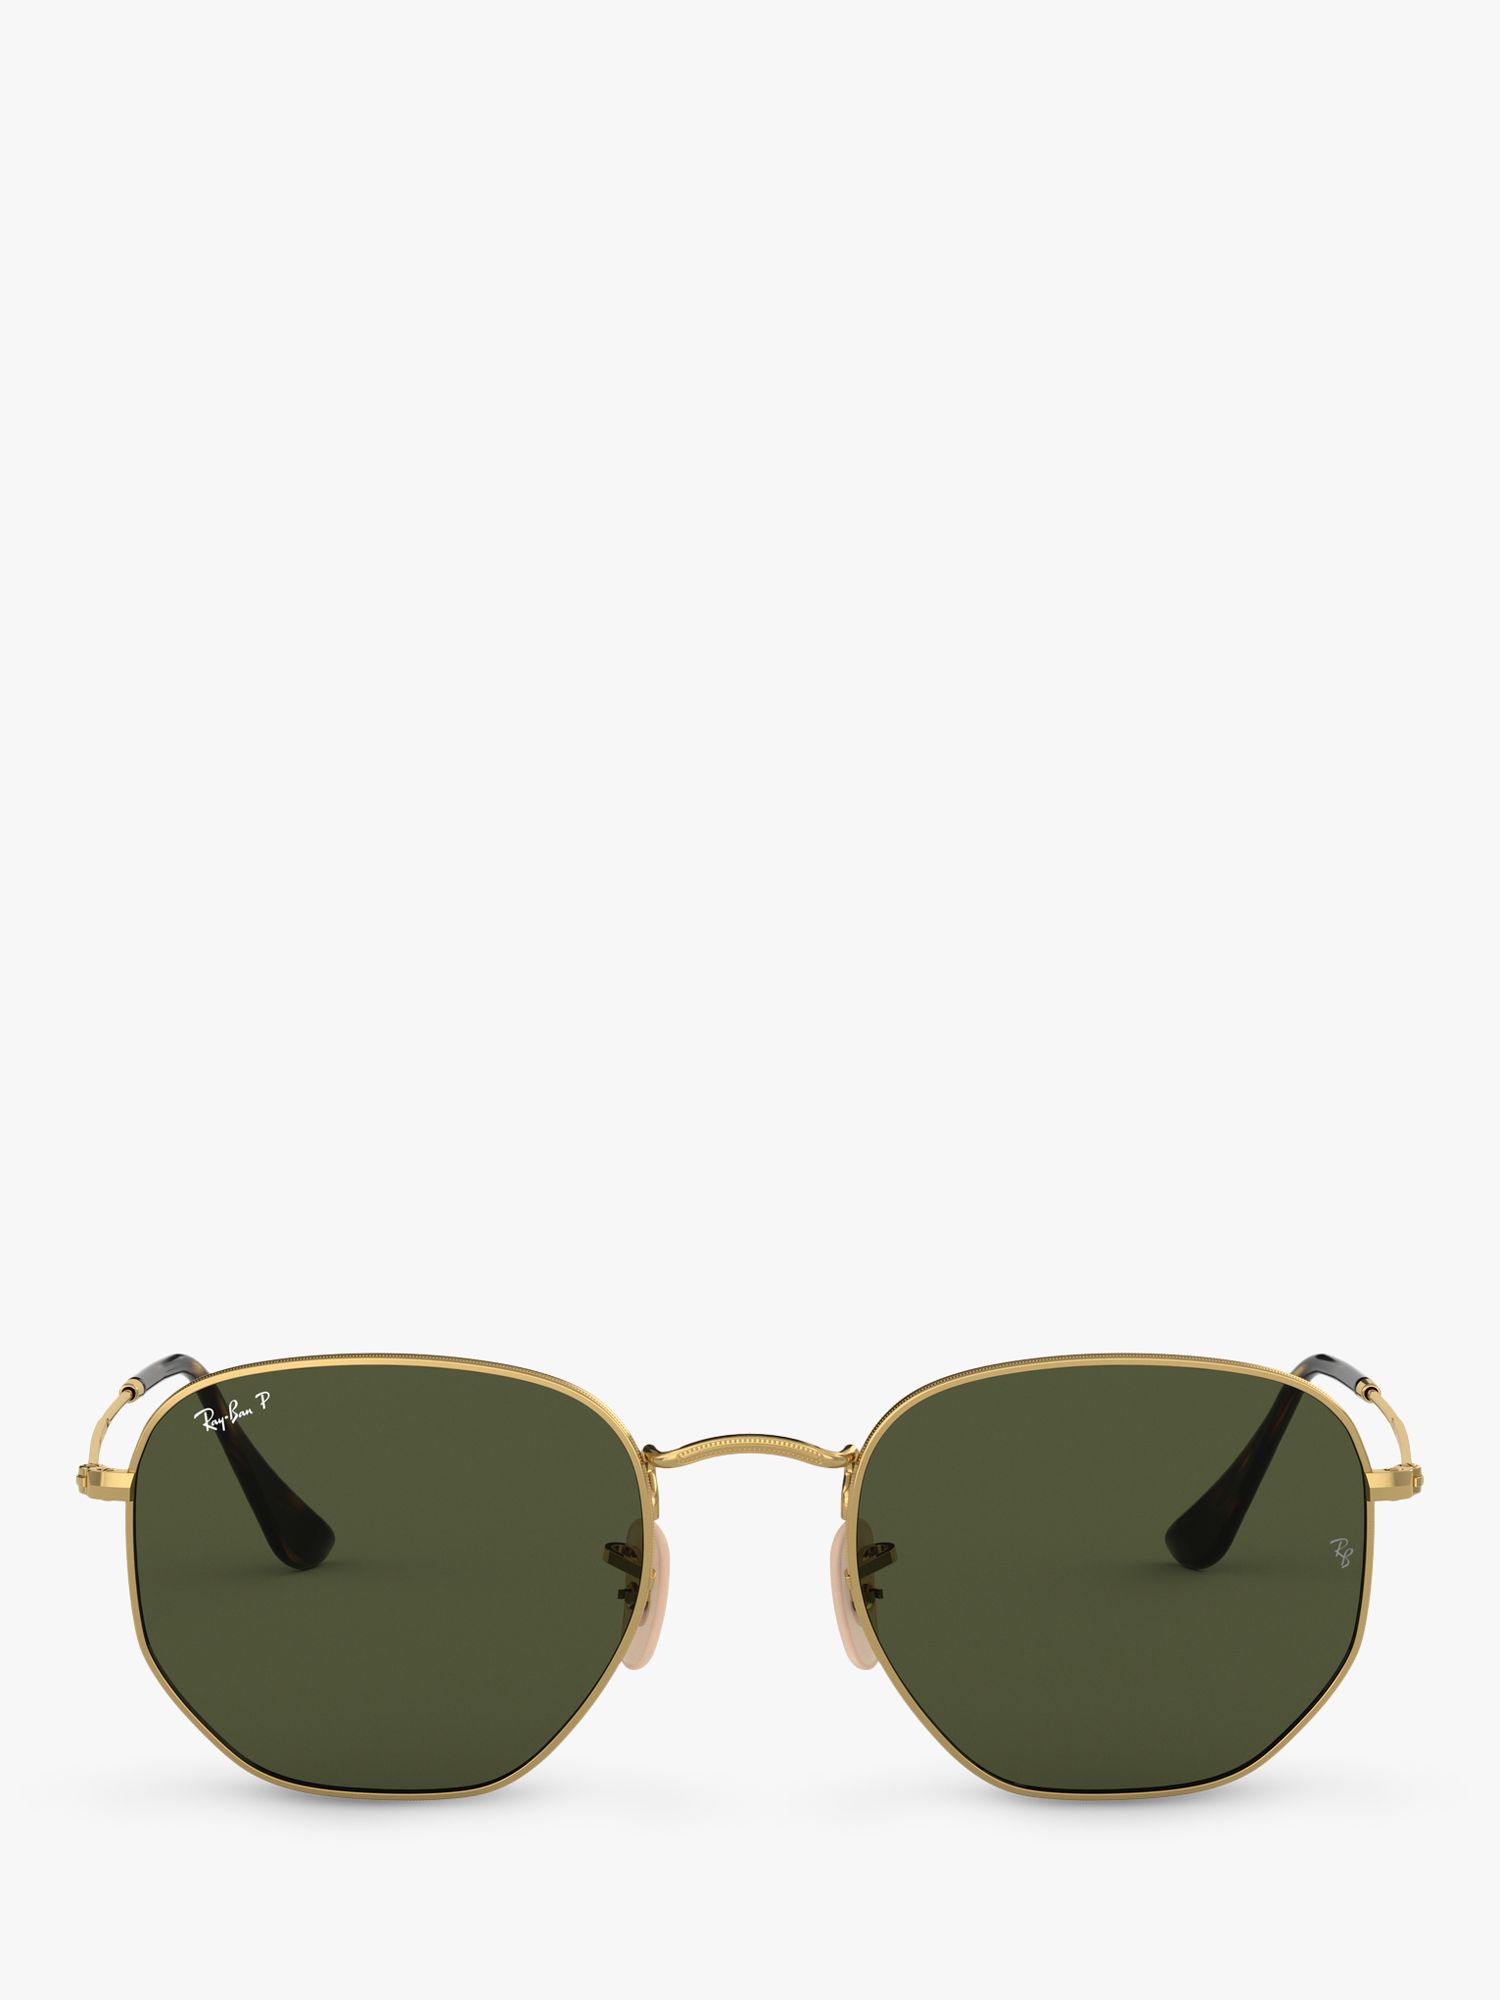 Ray-Ban RB3548N Unisex Polarised Hexagonal Sunglasses, Gold/Green